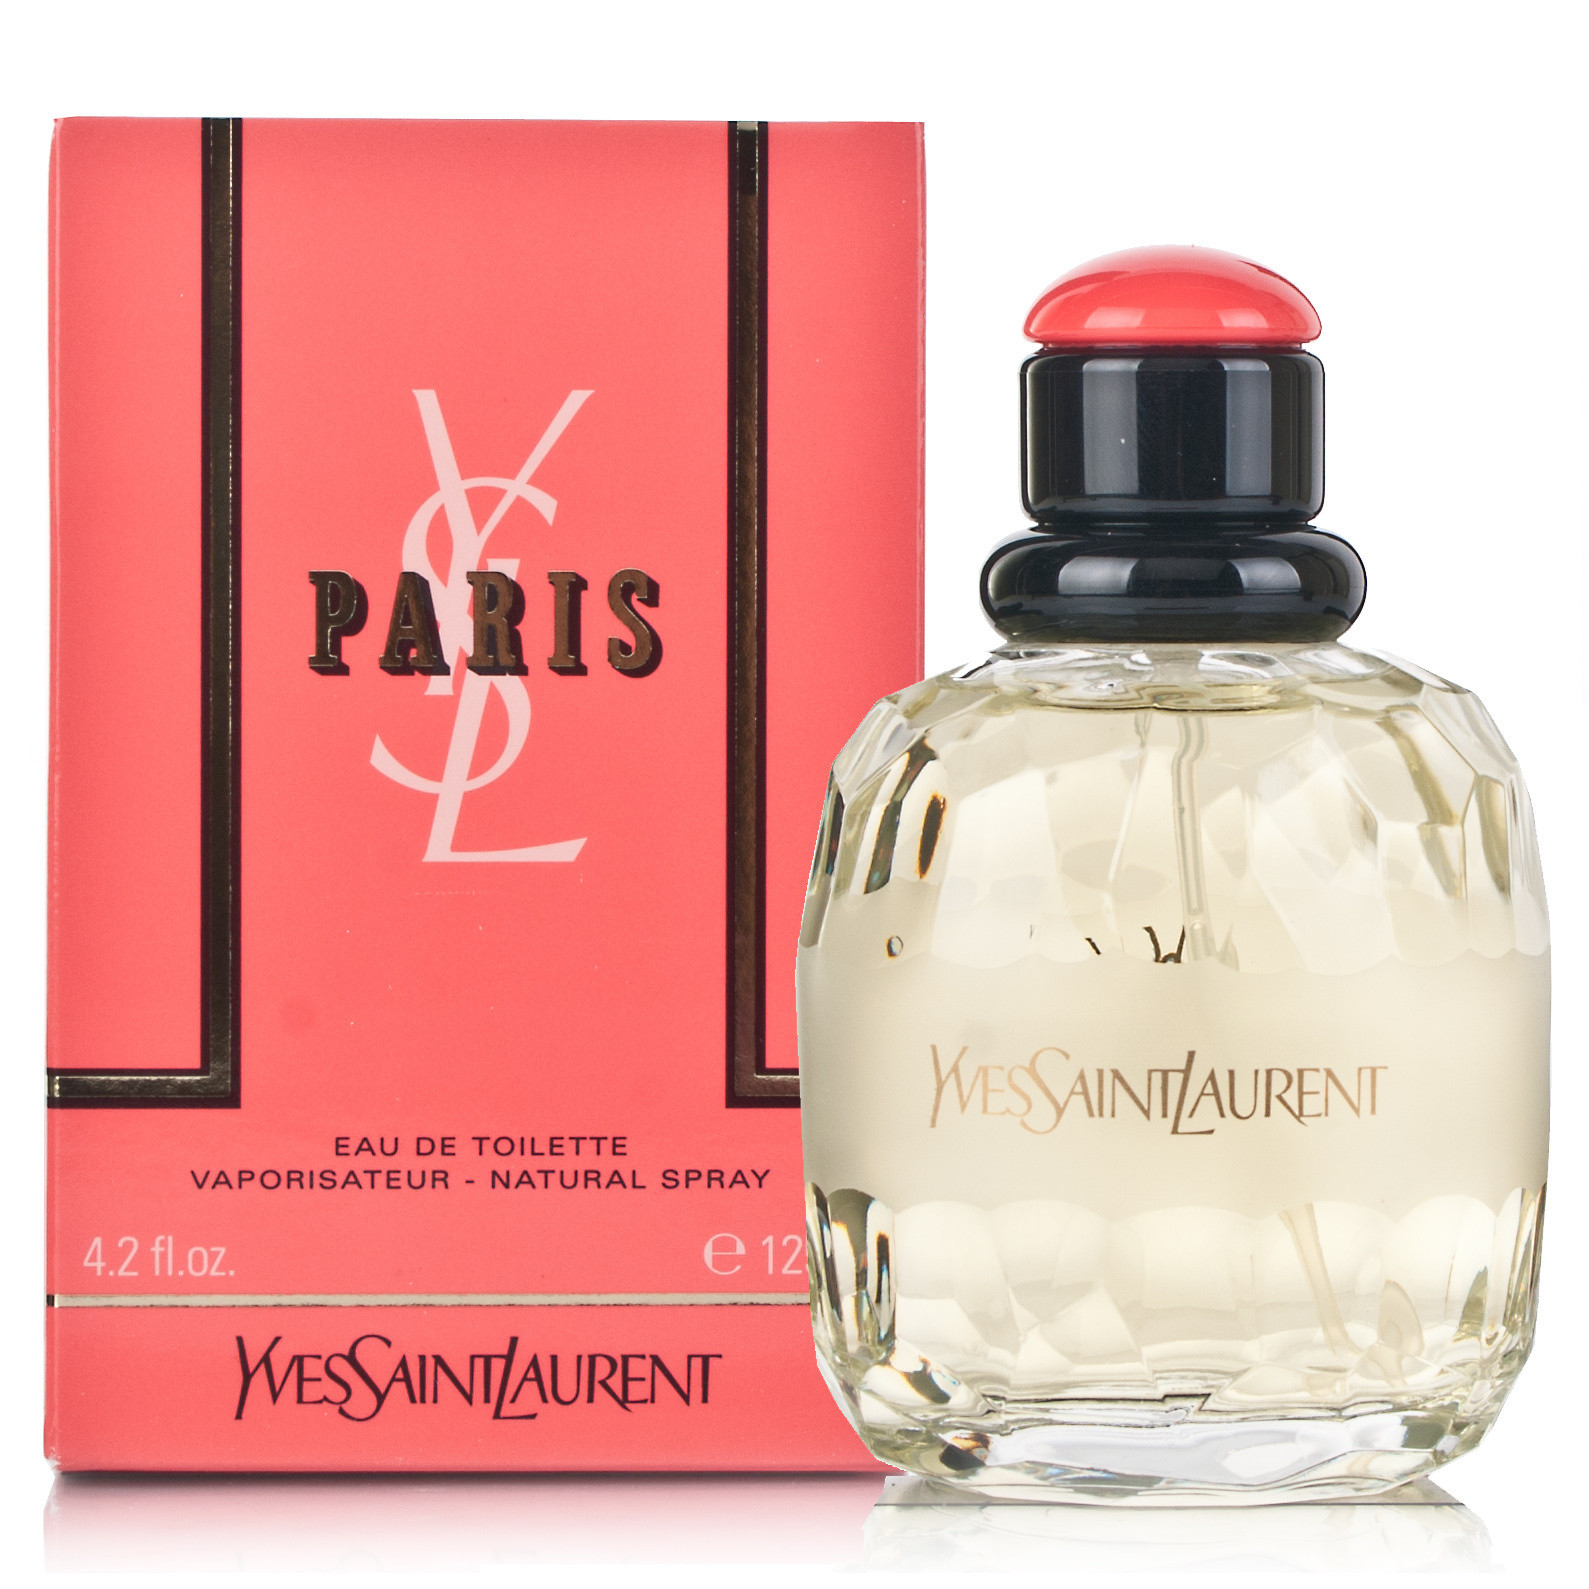 Paris Yves Saint Laurent аромат — аромат для женщин 1983